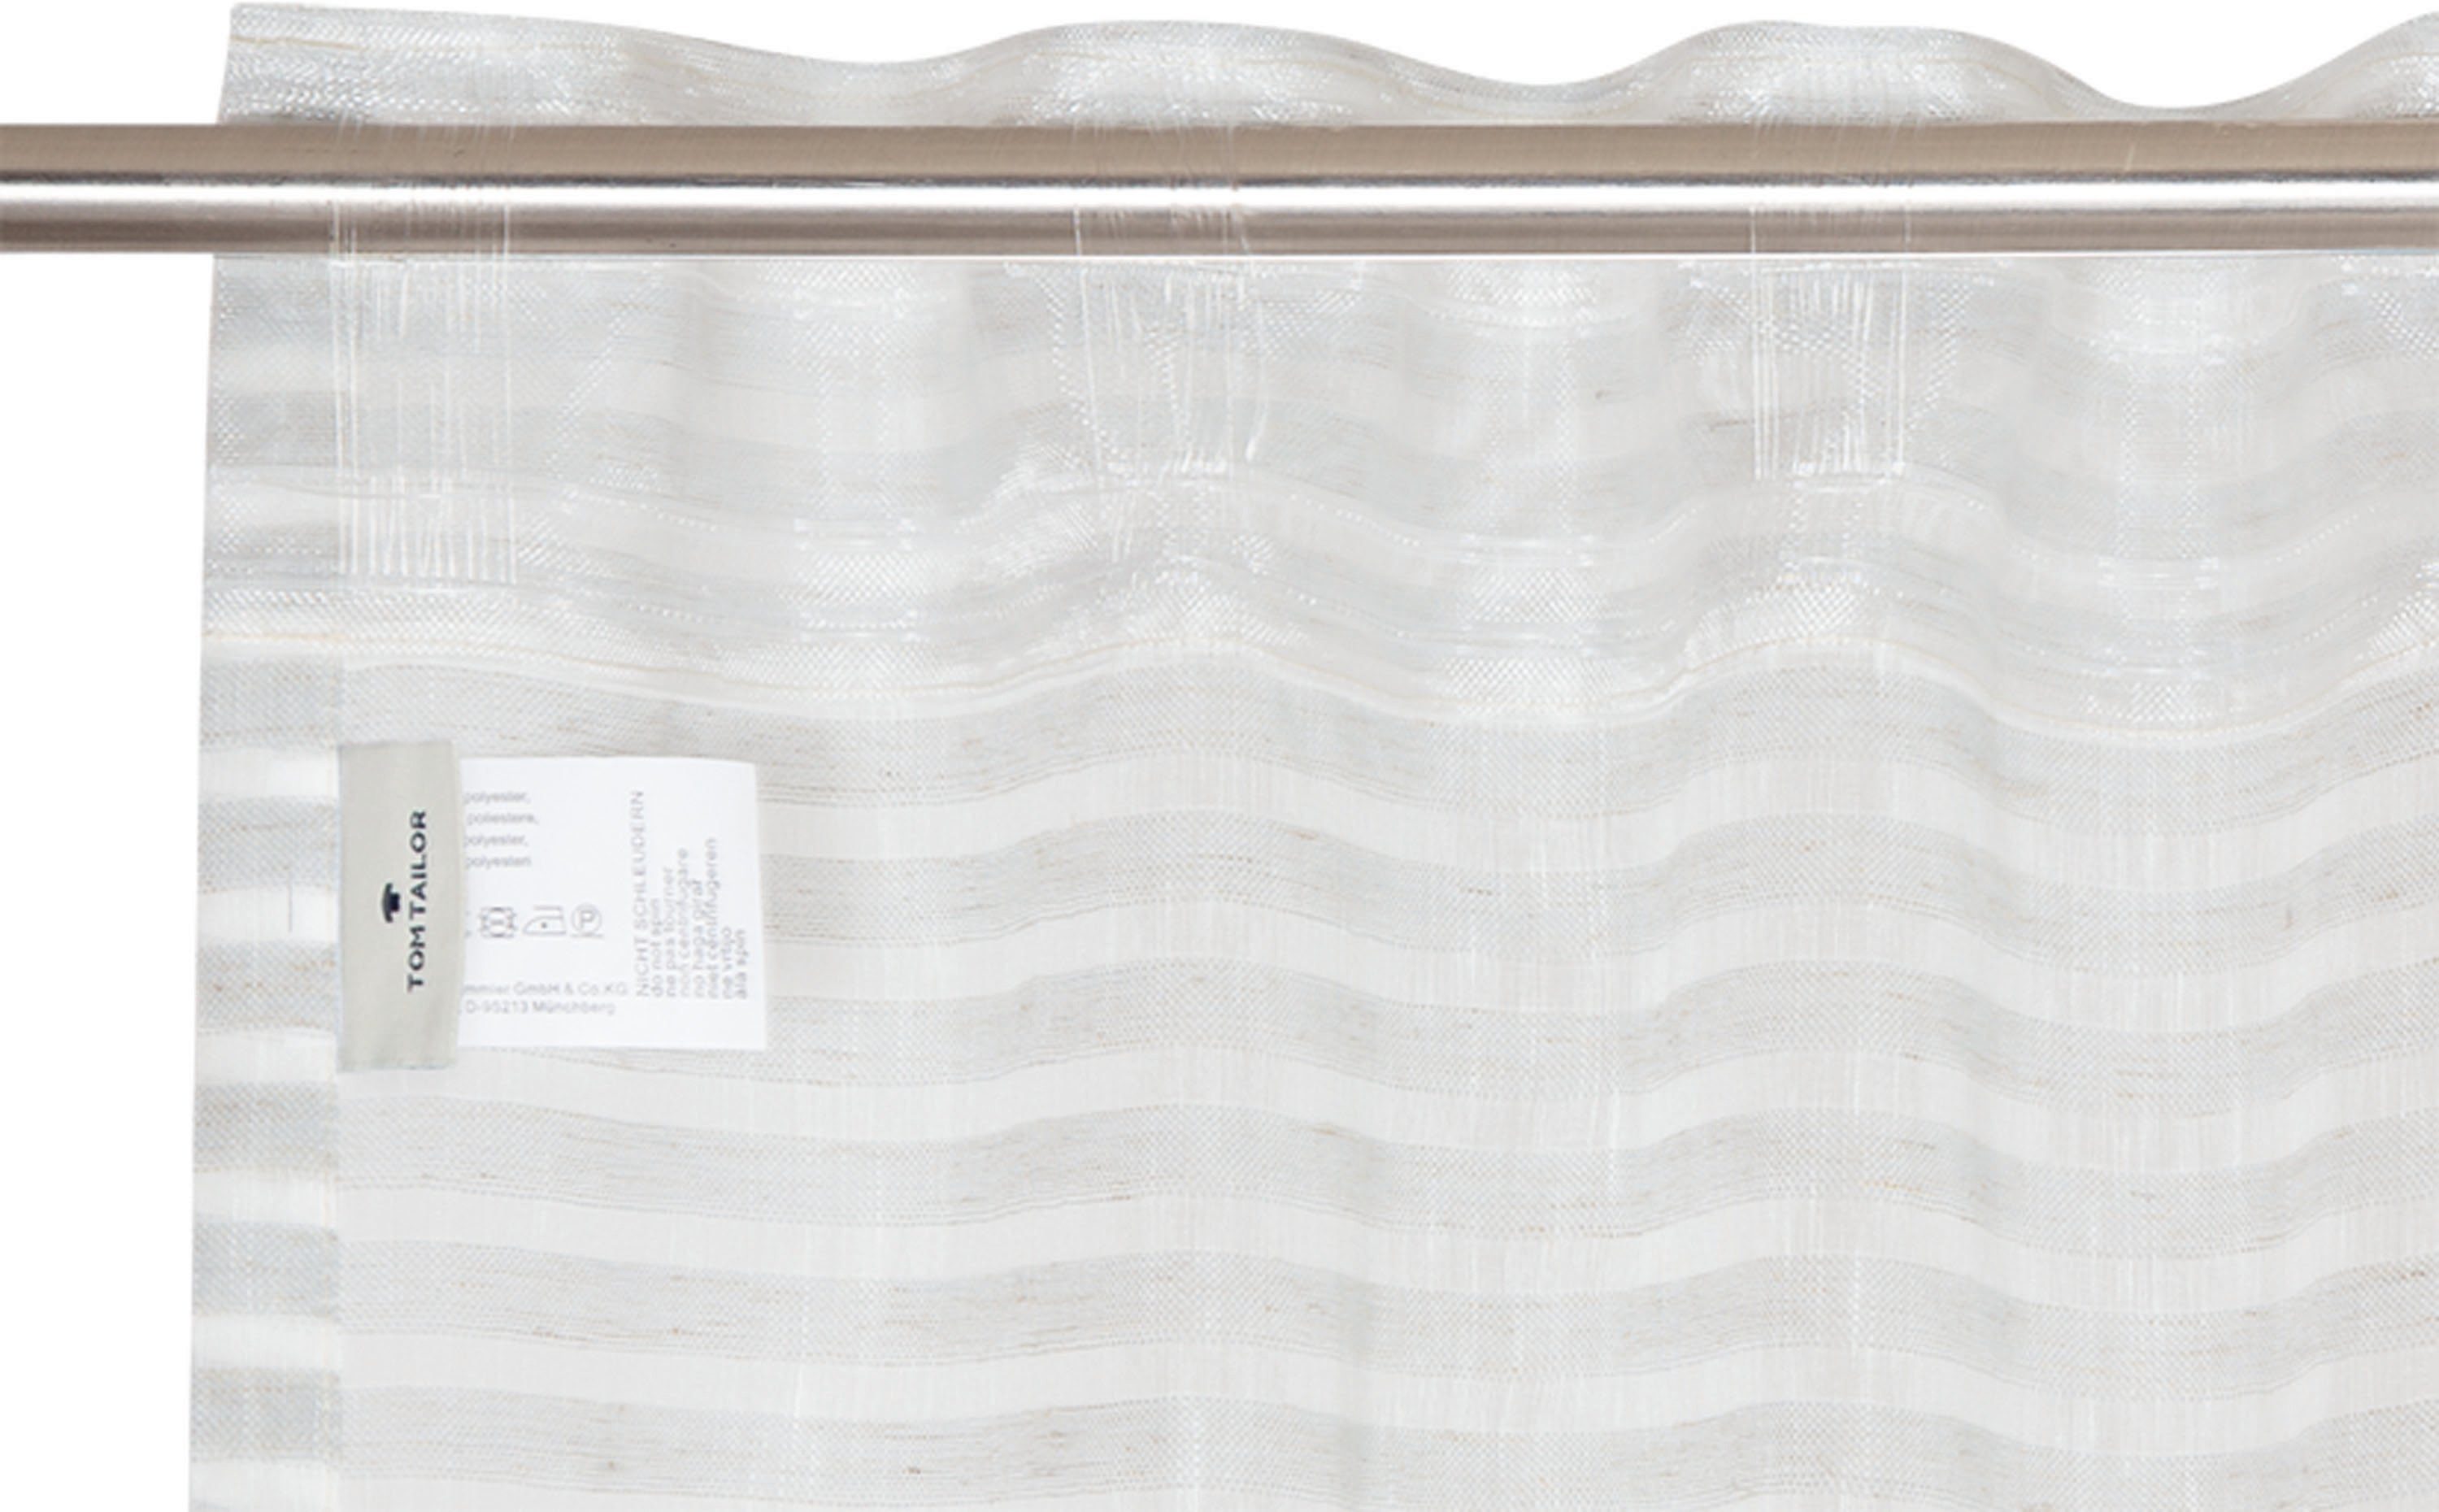 Stripe, transparent HOME, (1 transparent, Schlaufen Vorhang TAILOR verdeckte TOM St), grau Natural